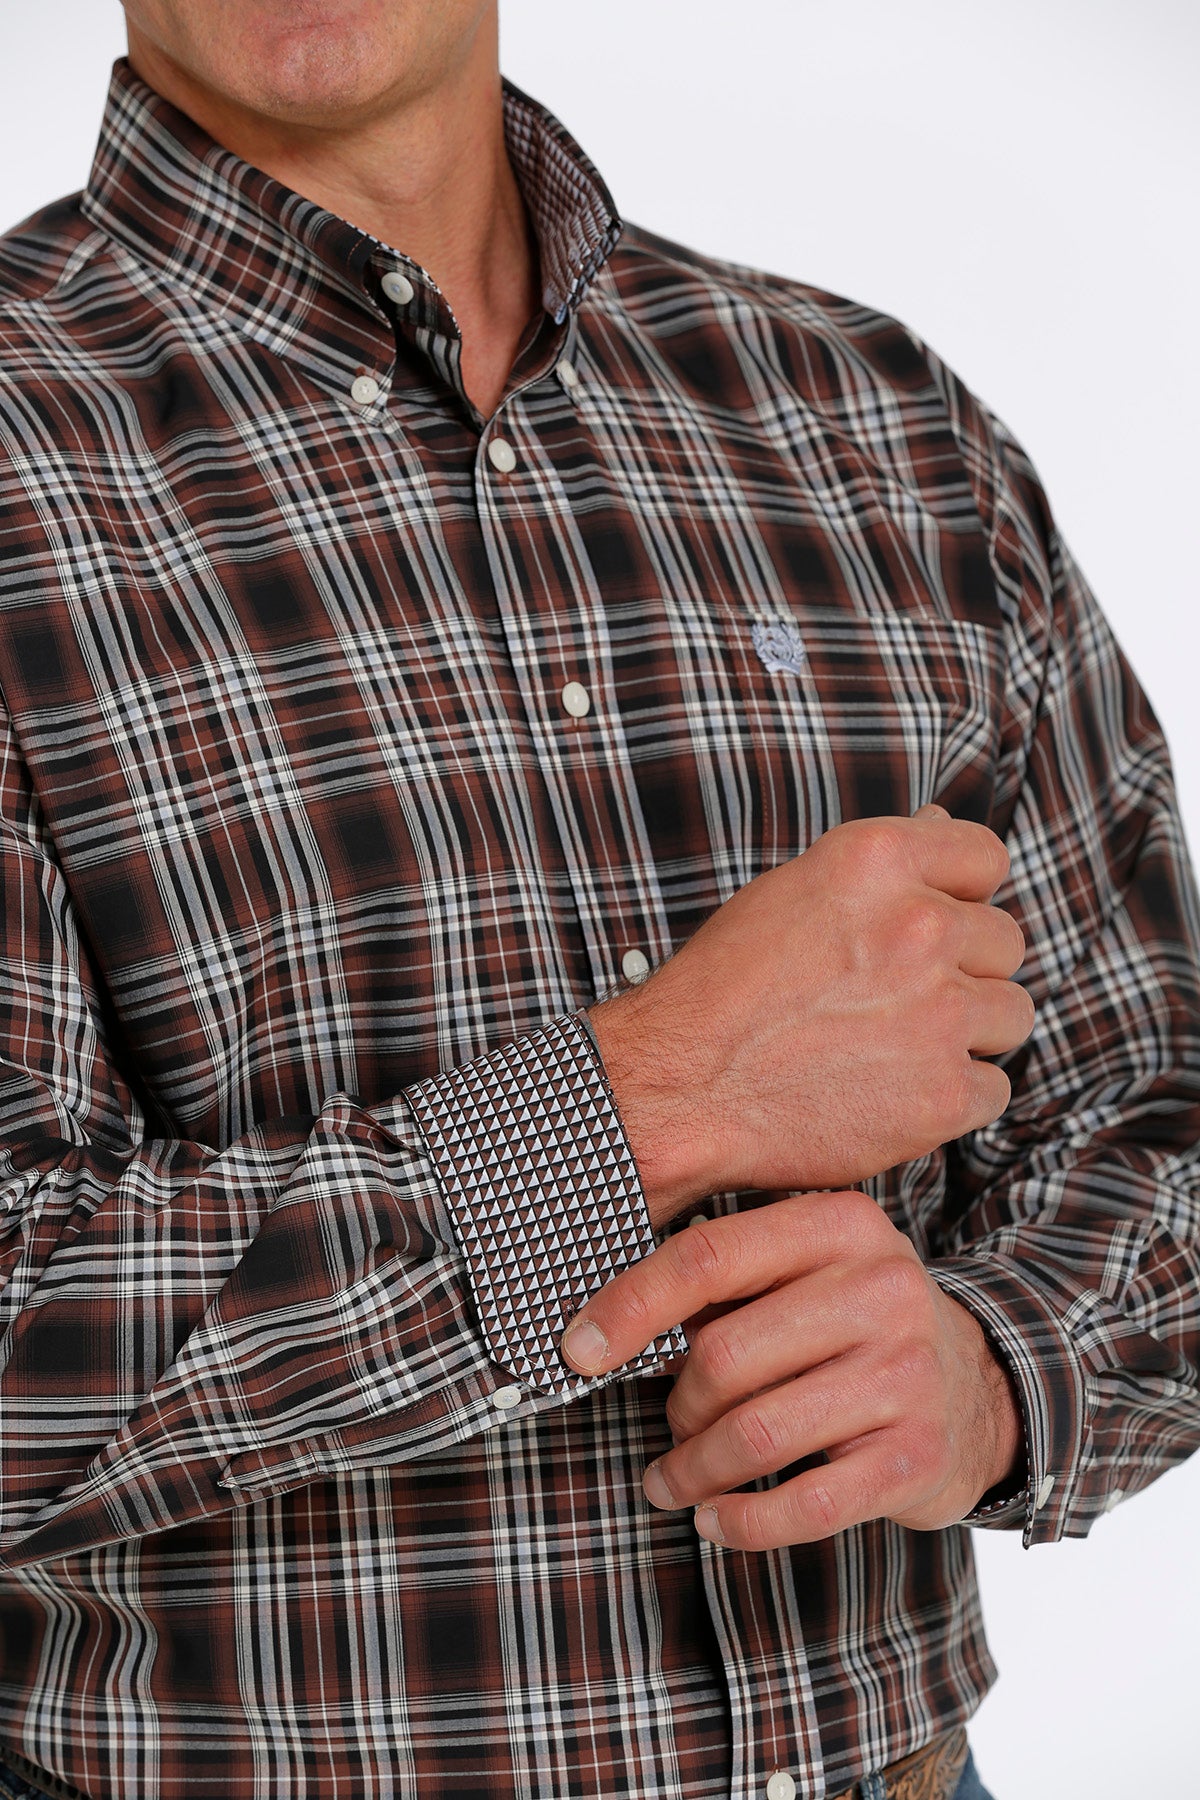 CINCH Men's Brown Plaid Button-Down Western Shirt